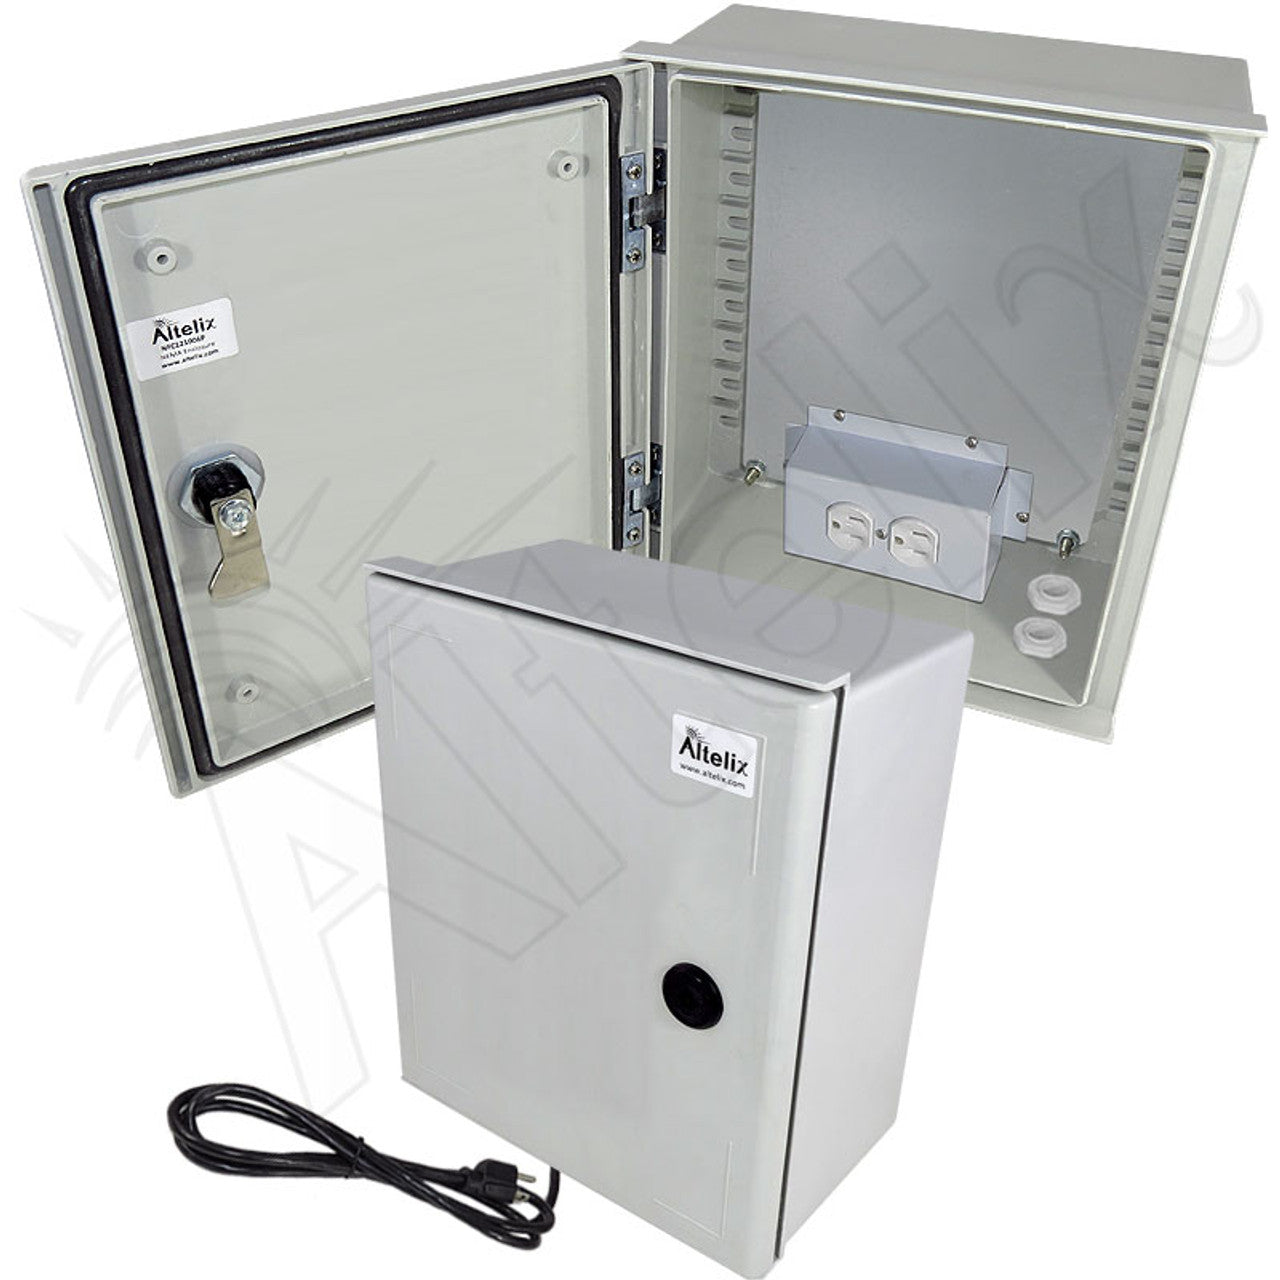 Altelix NEMA 3X Fiberglass Weatherproof Enclosure with Equipment Mounting Plate, 120 VAC Outlets & Power Cord